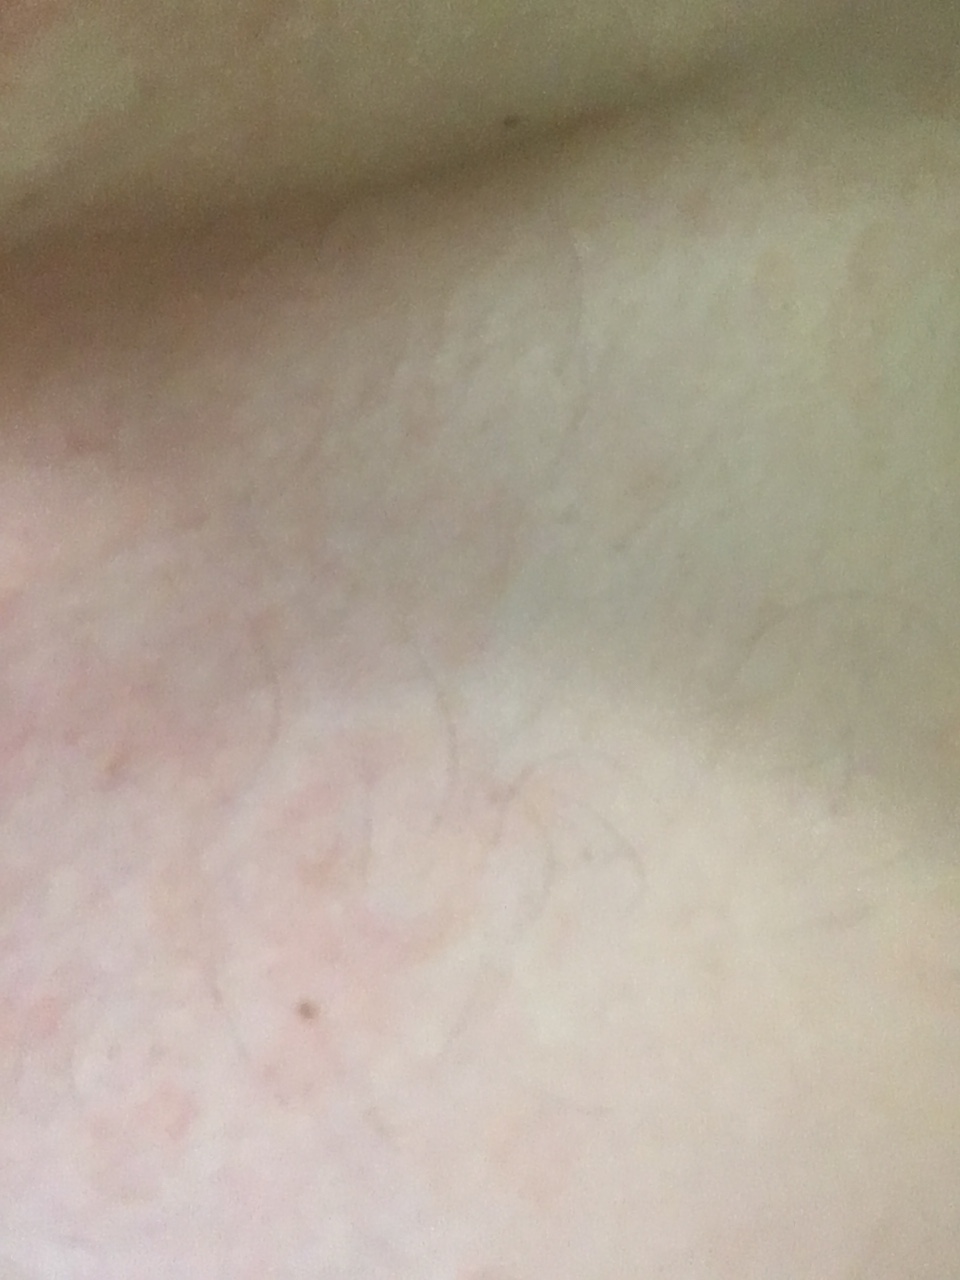 светло коричневые пятна на груди у женщин фото 42